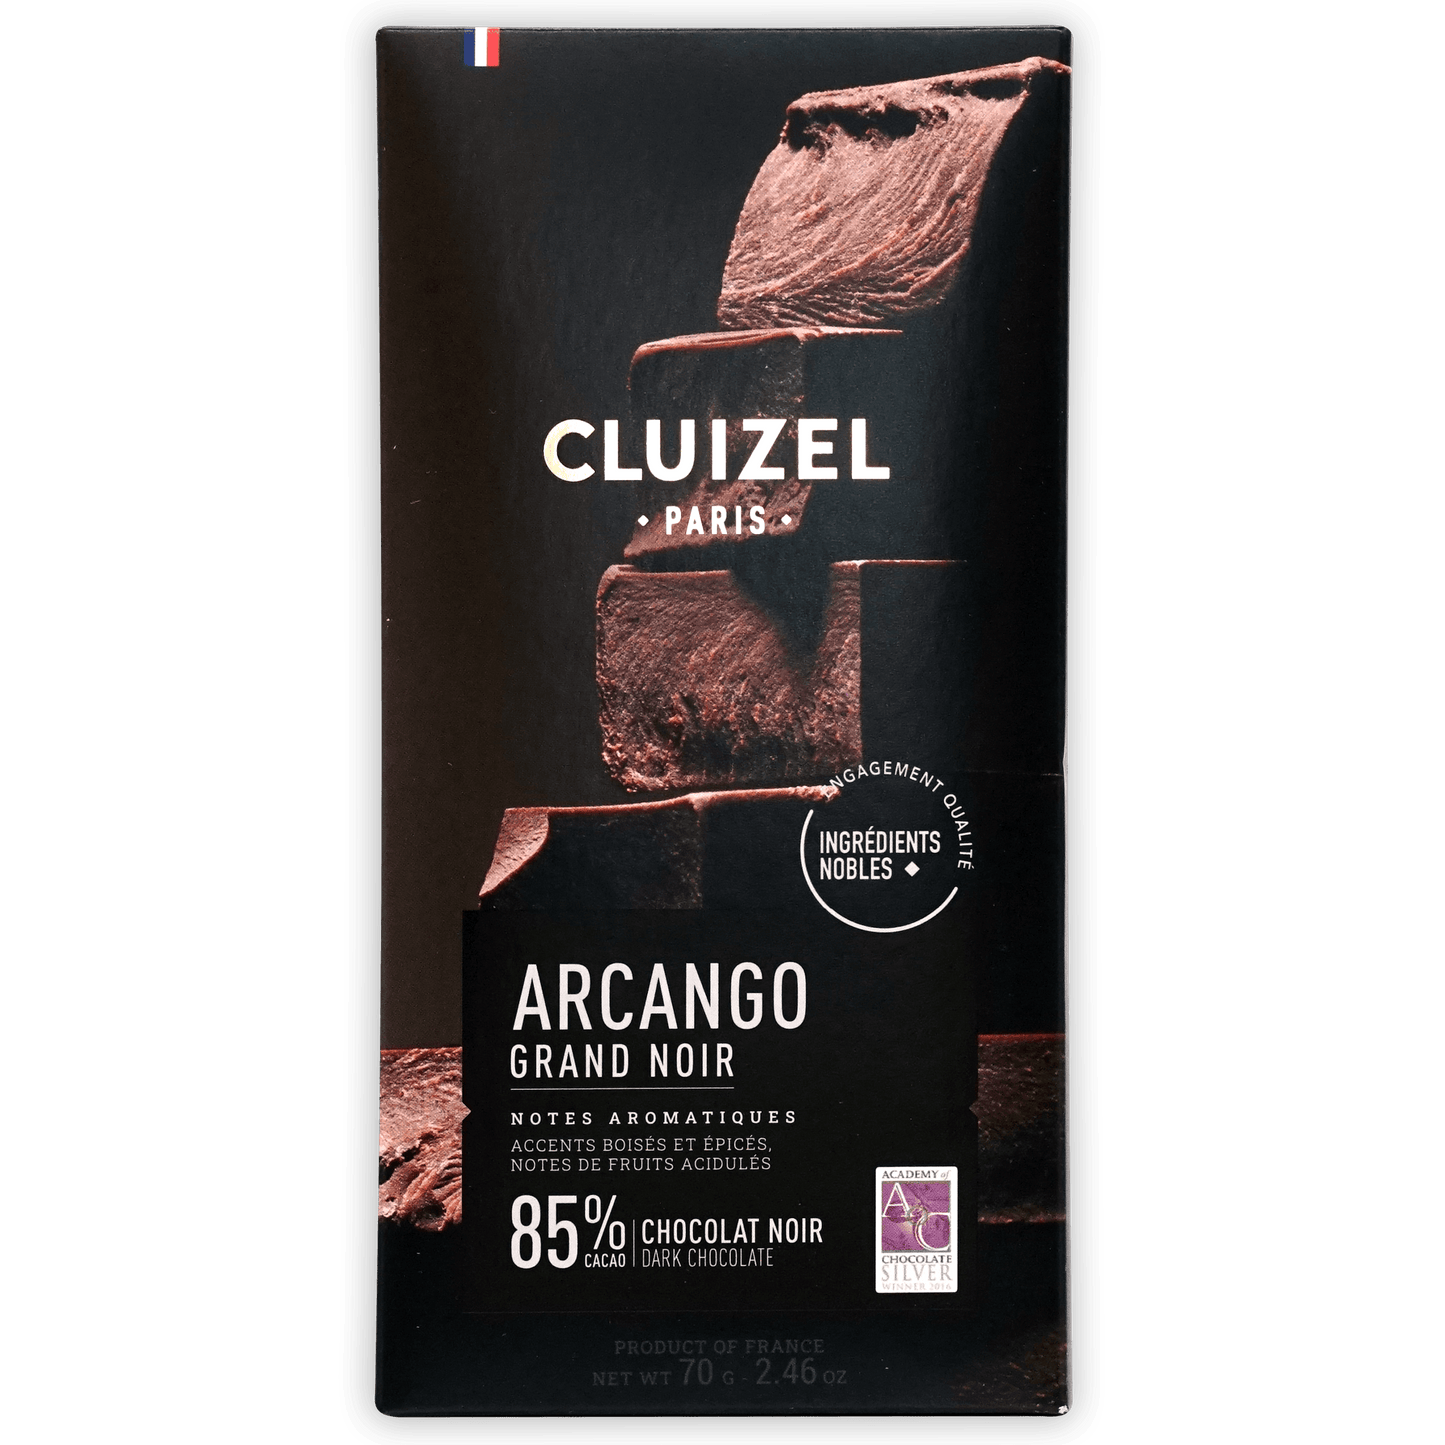 Chocolate Bar (3.5oz) — Buckeye Chocolate Co